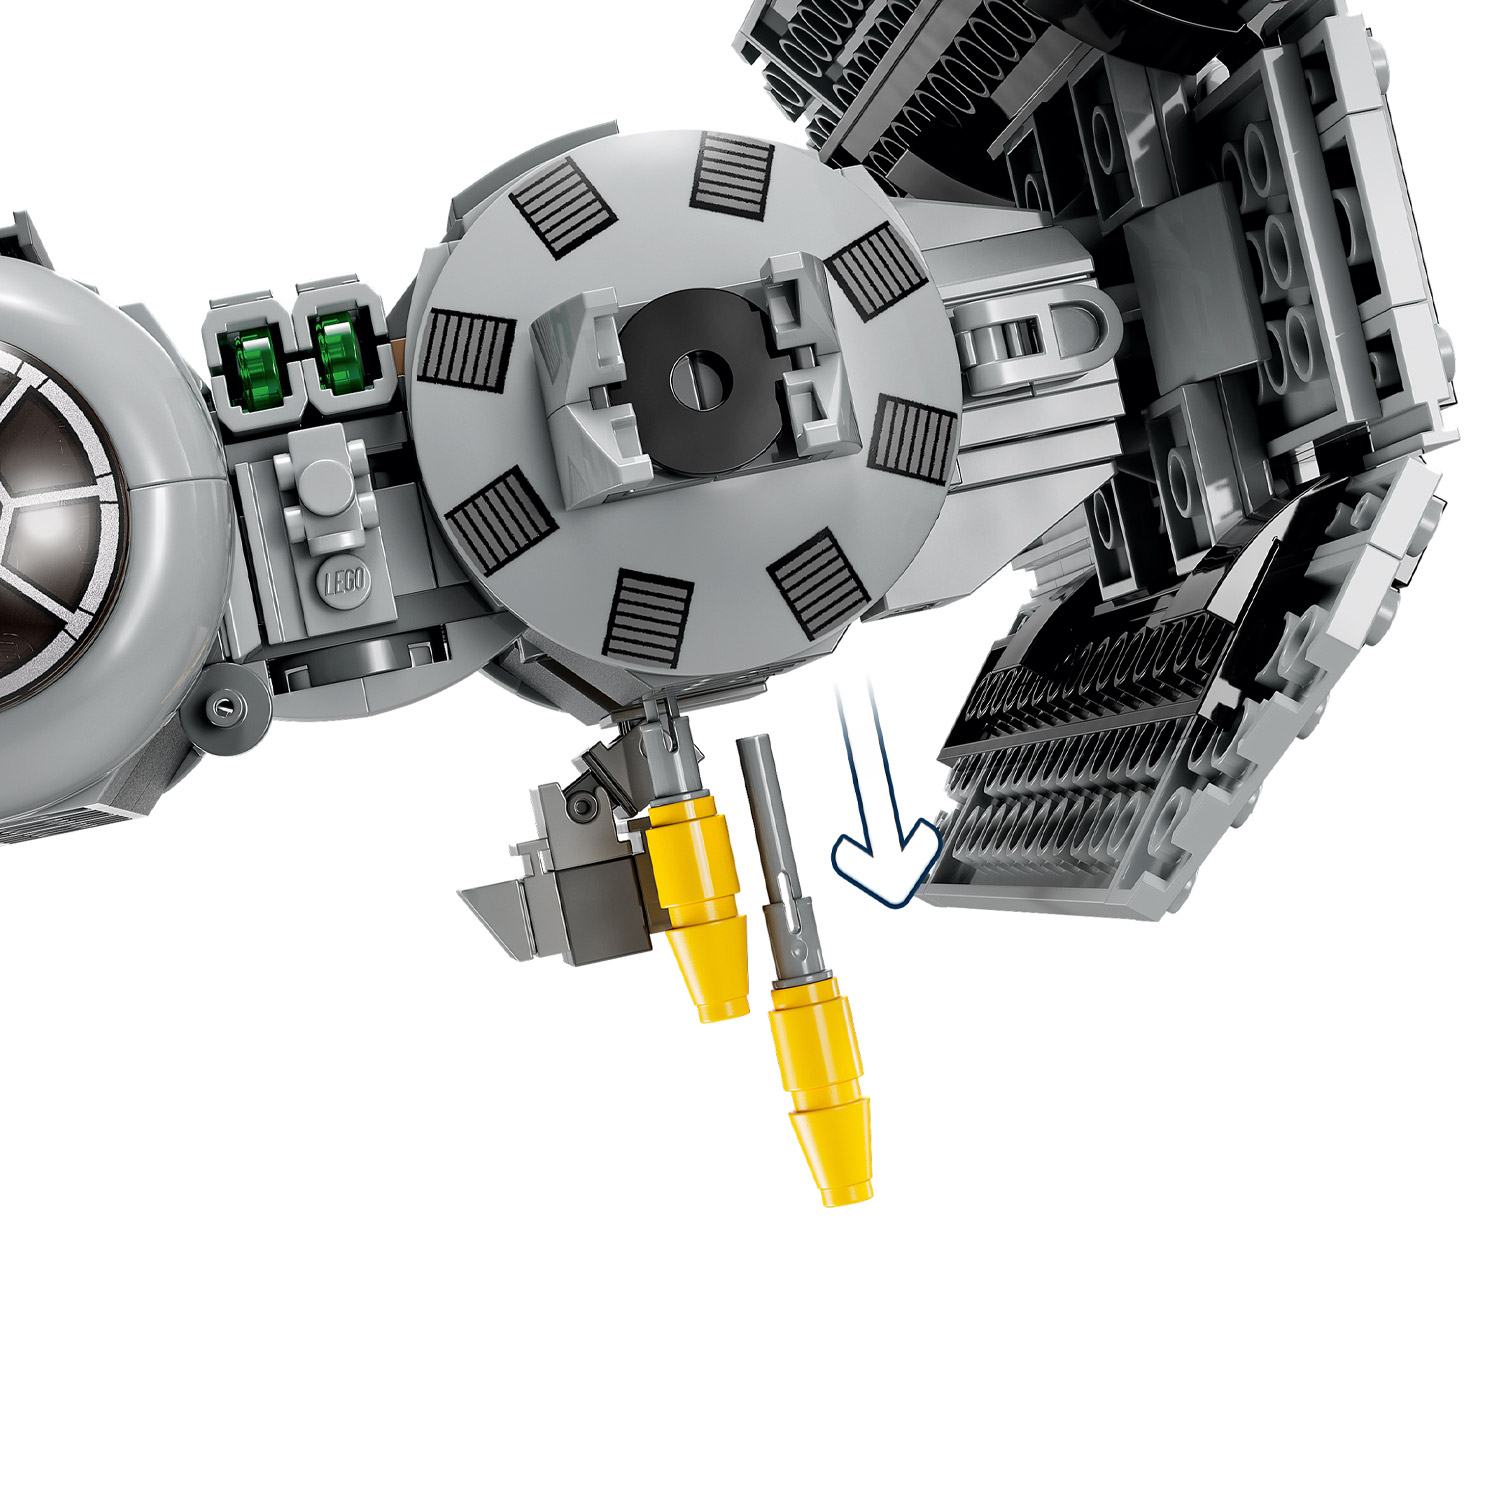 75347 LEGO Star Wars TIE-Bomber